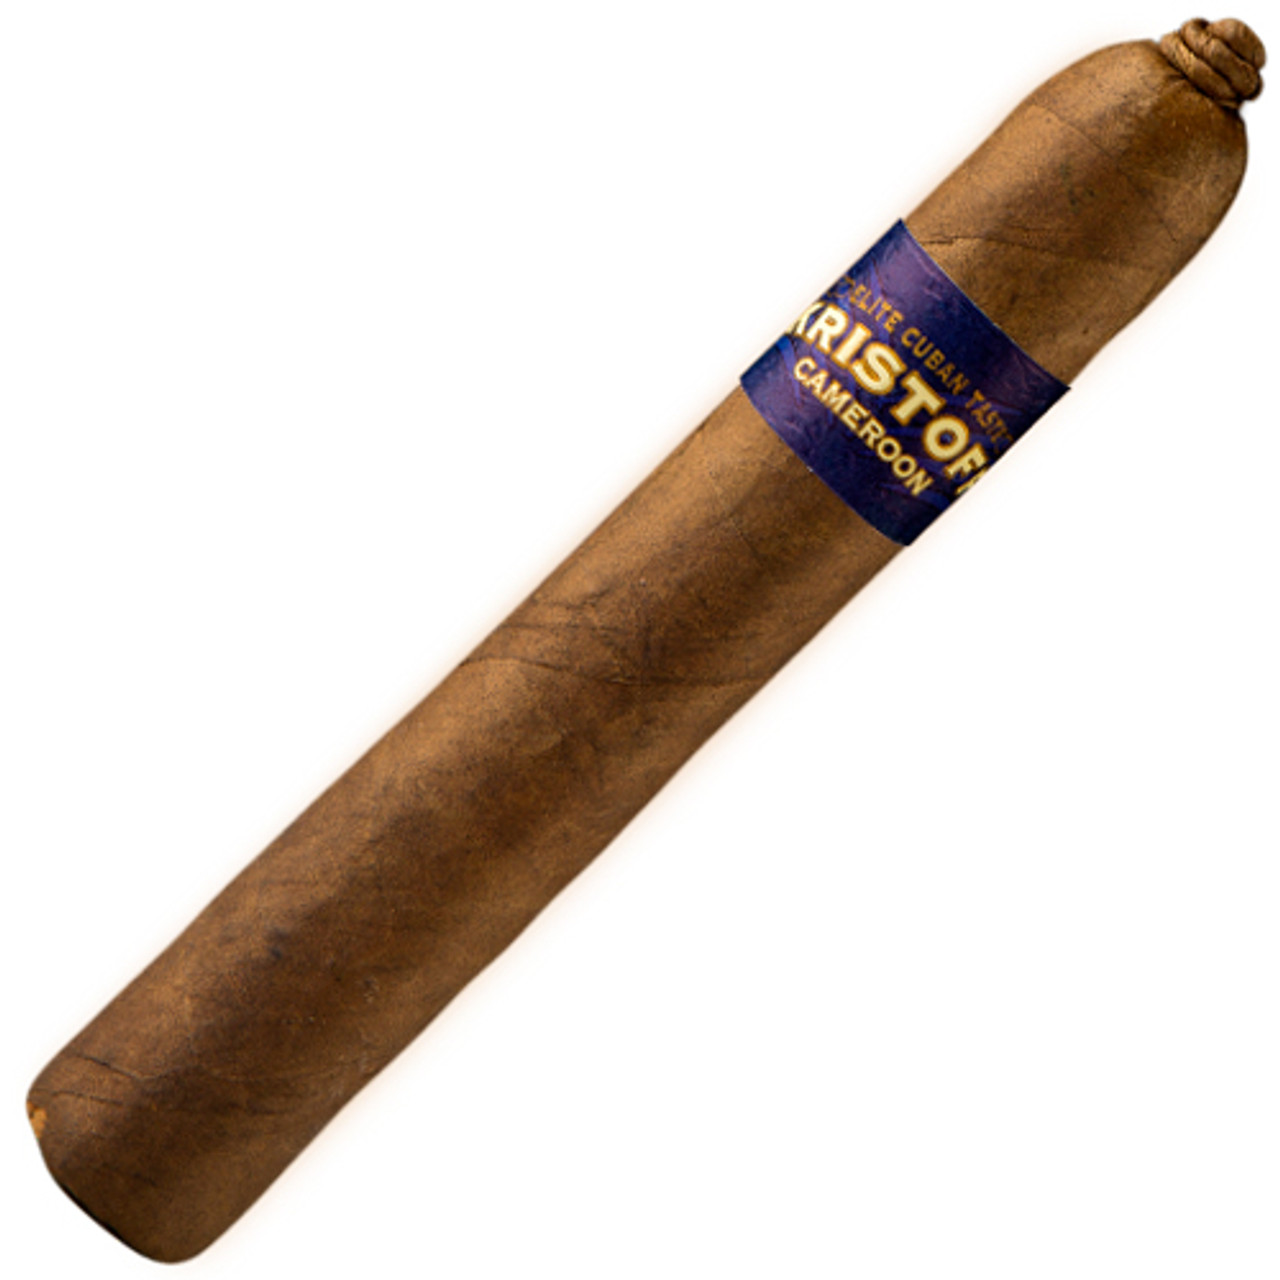 Kristoff Cameroon Robusto Cigars - 5.5 x 54 (Box of 20)